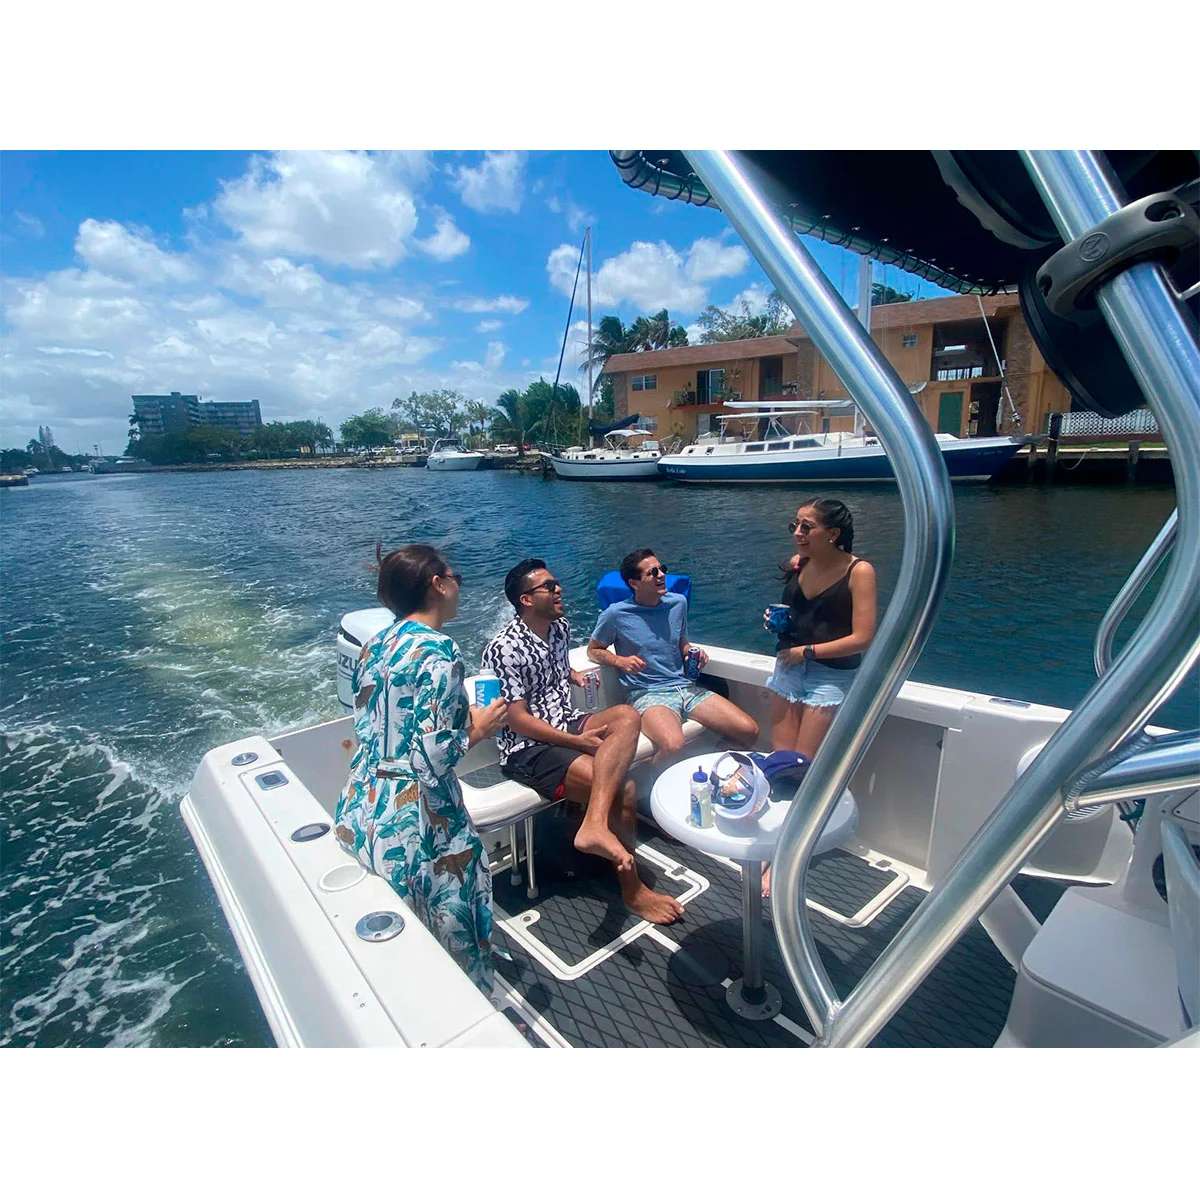 29ft - Motor Boat Charter USA & Boat hire in United States Florida Miami Beach Miami Beach Marina 2